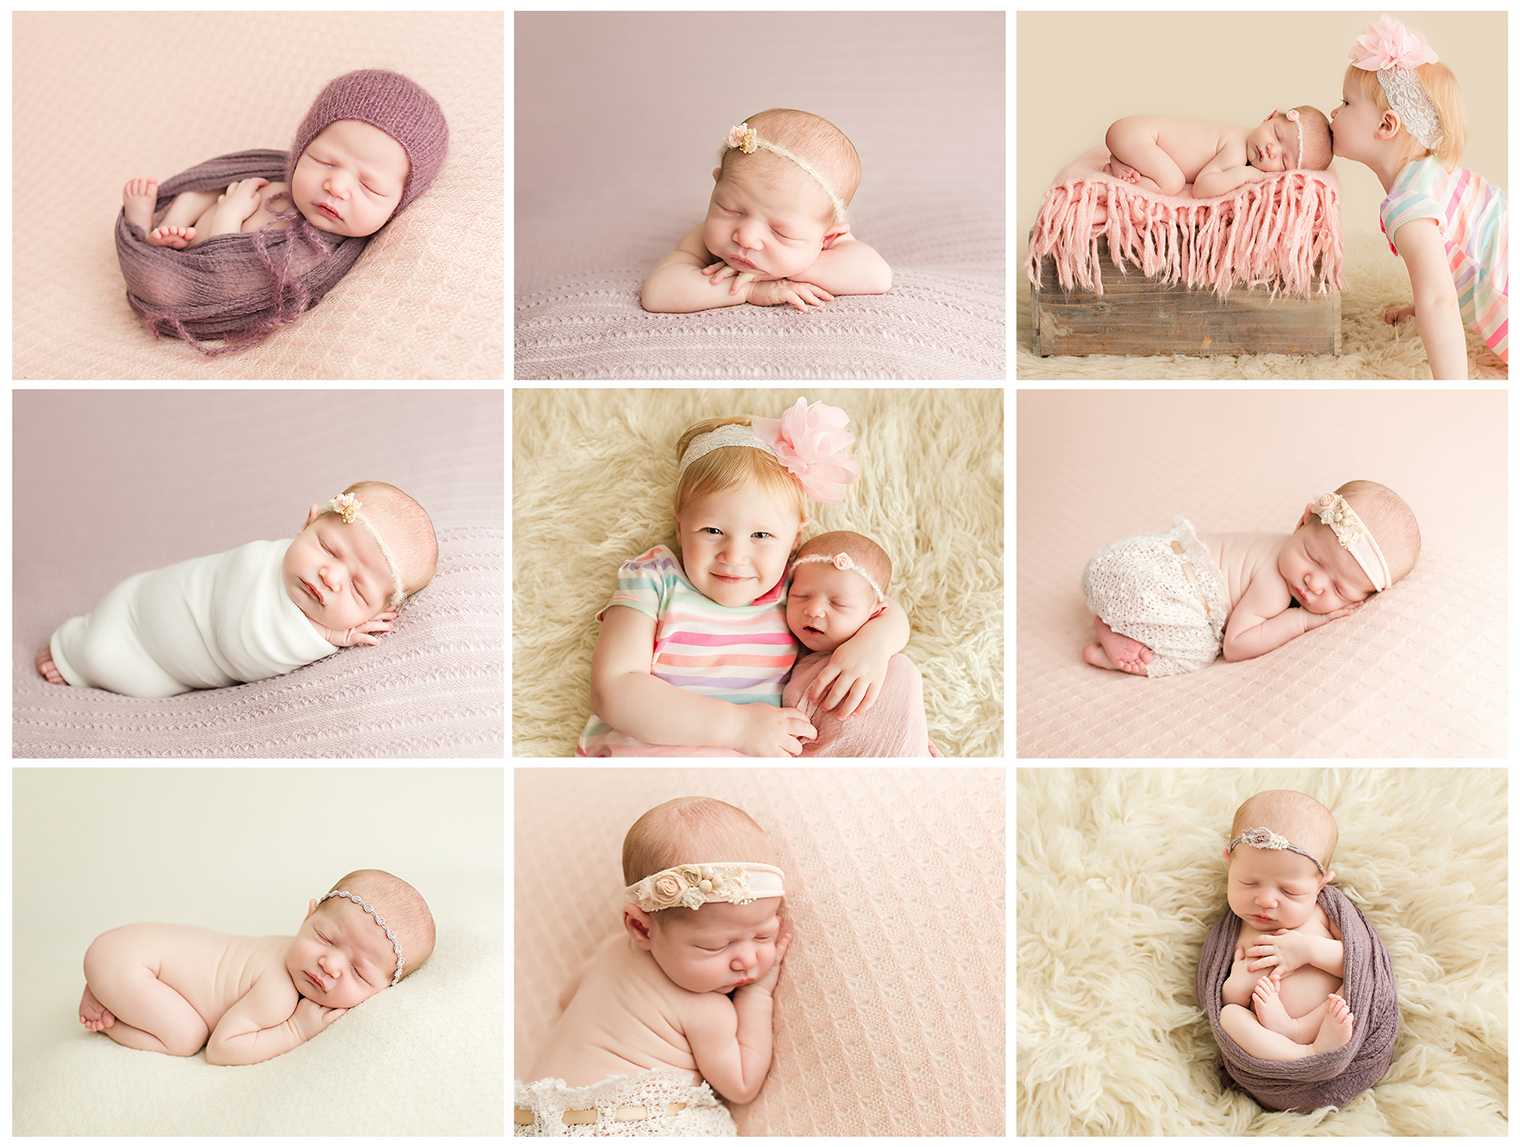 Customized newborn session by Idalia Photography